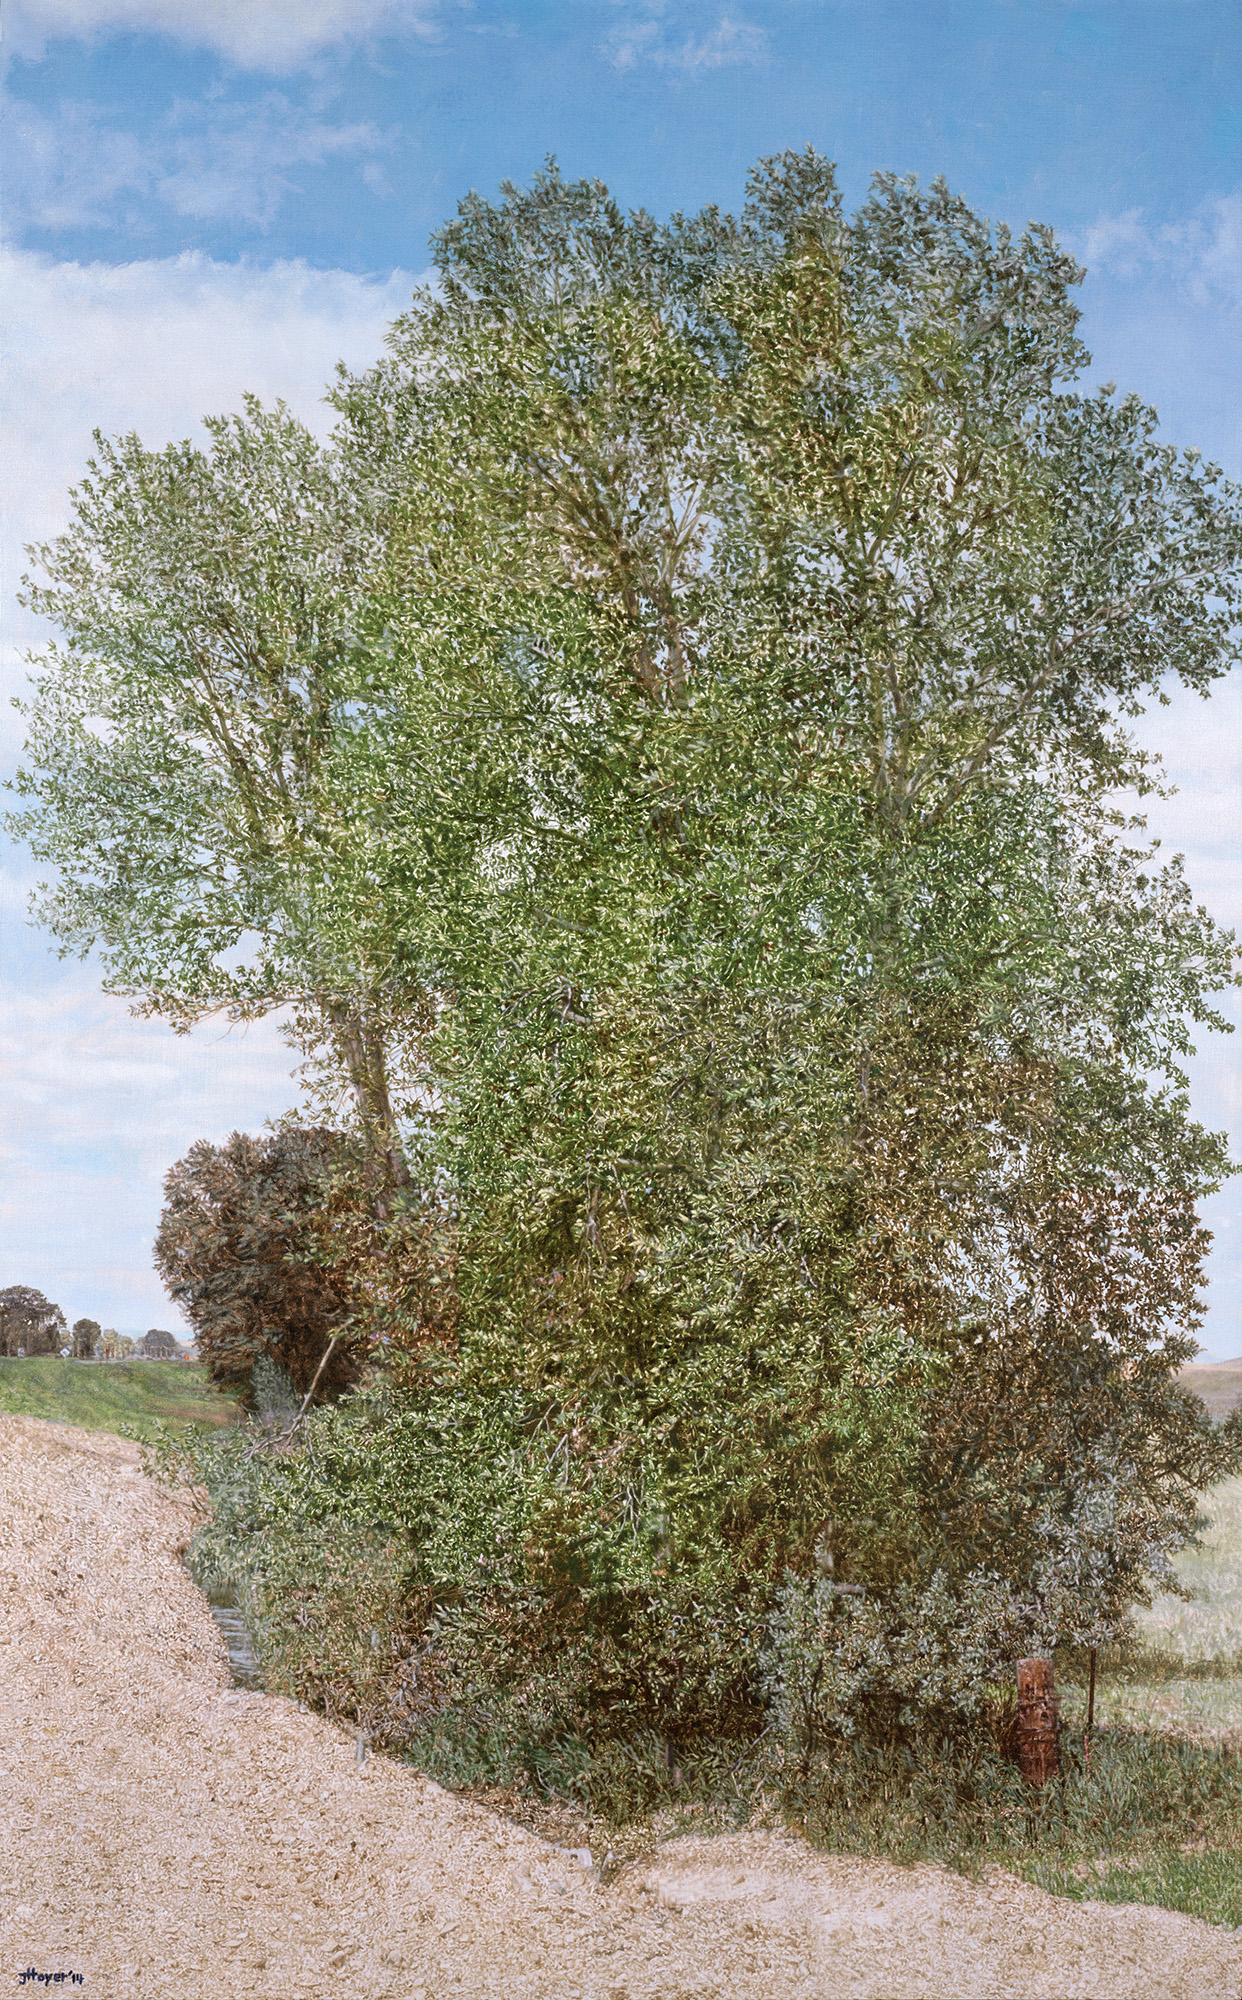   Montana Detour Tree , 2014 Oil on linen 60 1/2 x 38 inches    